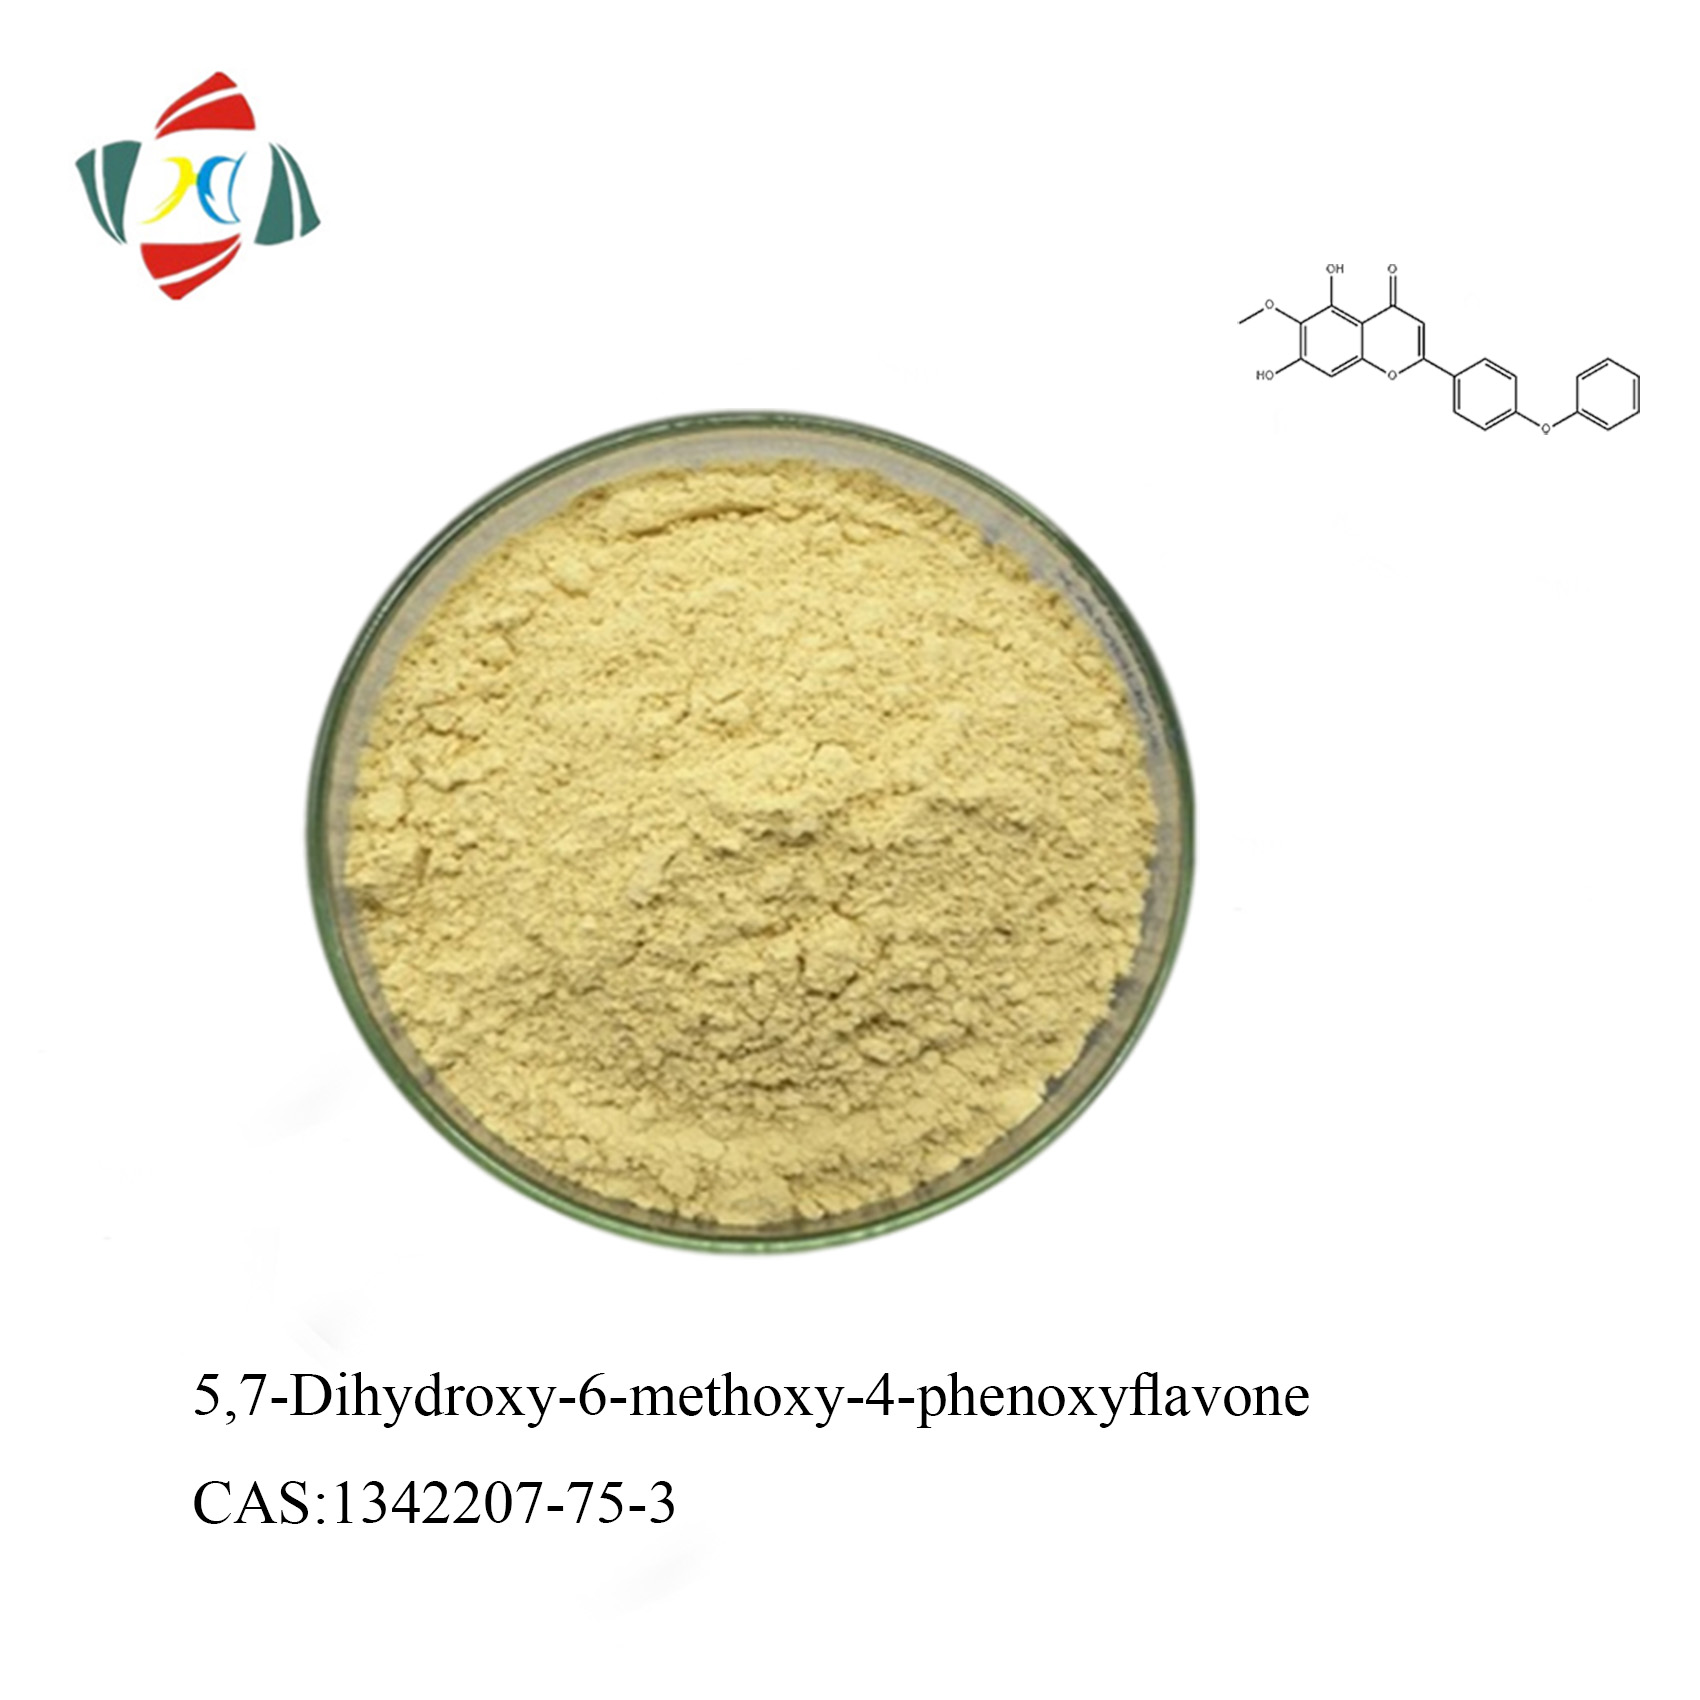 5,7-Dihydroxy-6-méthoxy-4-phénoxyflavone CAS 1342207-75-3